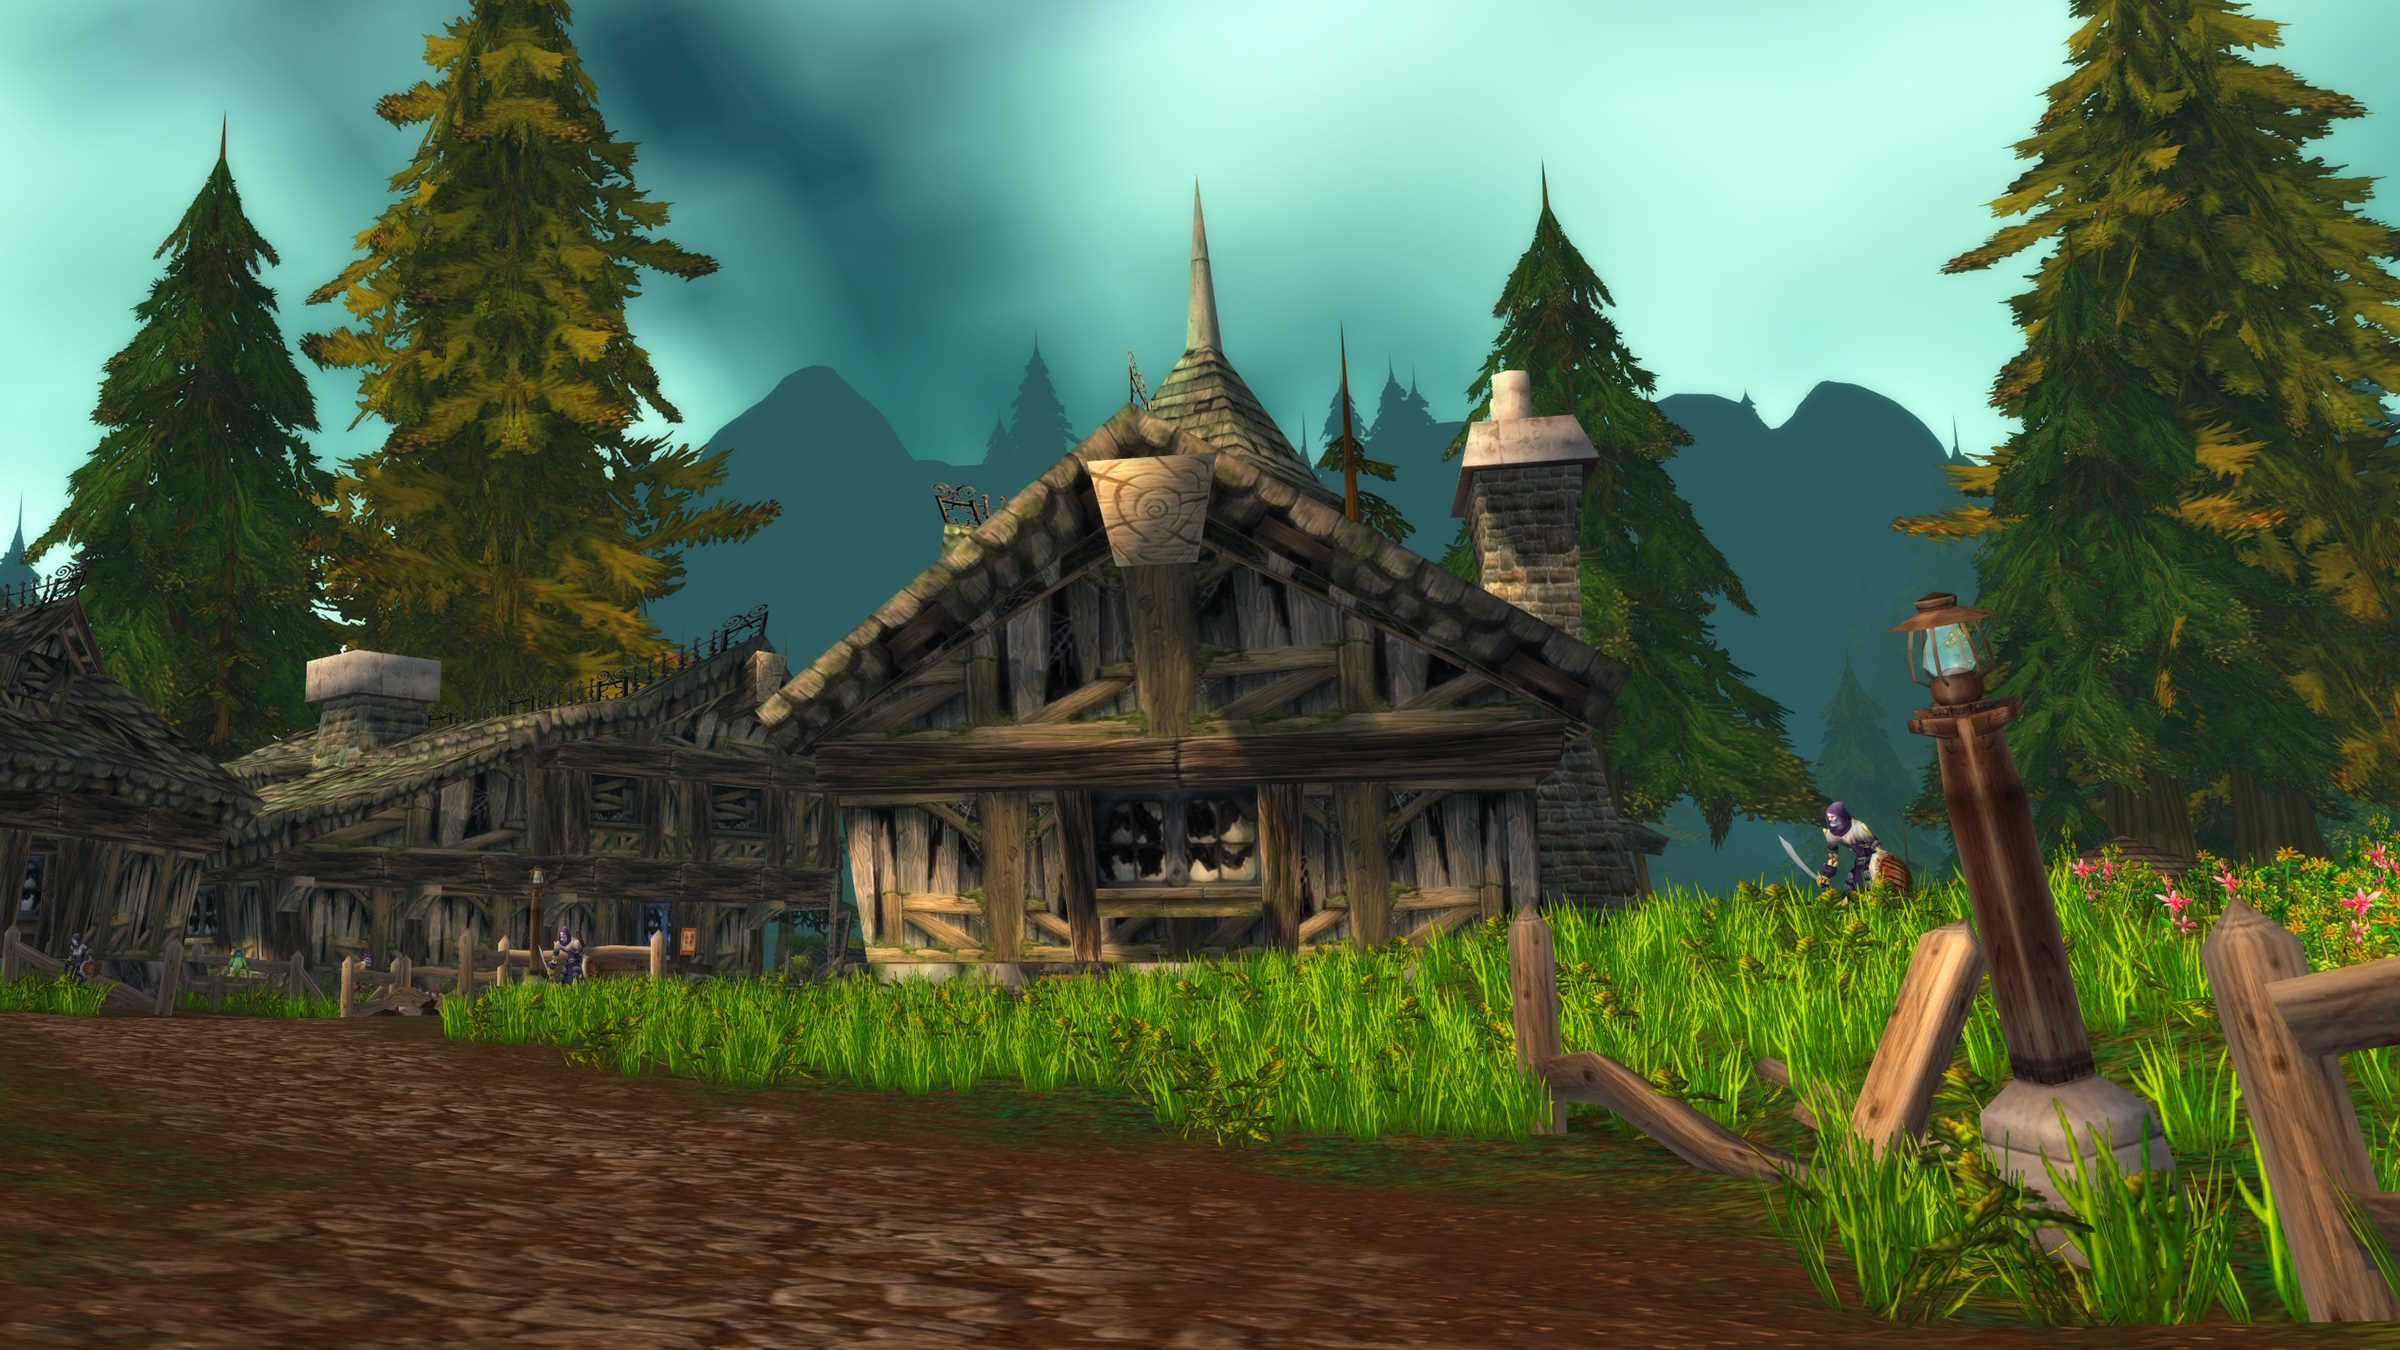 WotLK Class, Realm, & Community Discord Servers - Warcraft Tavern